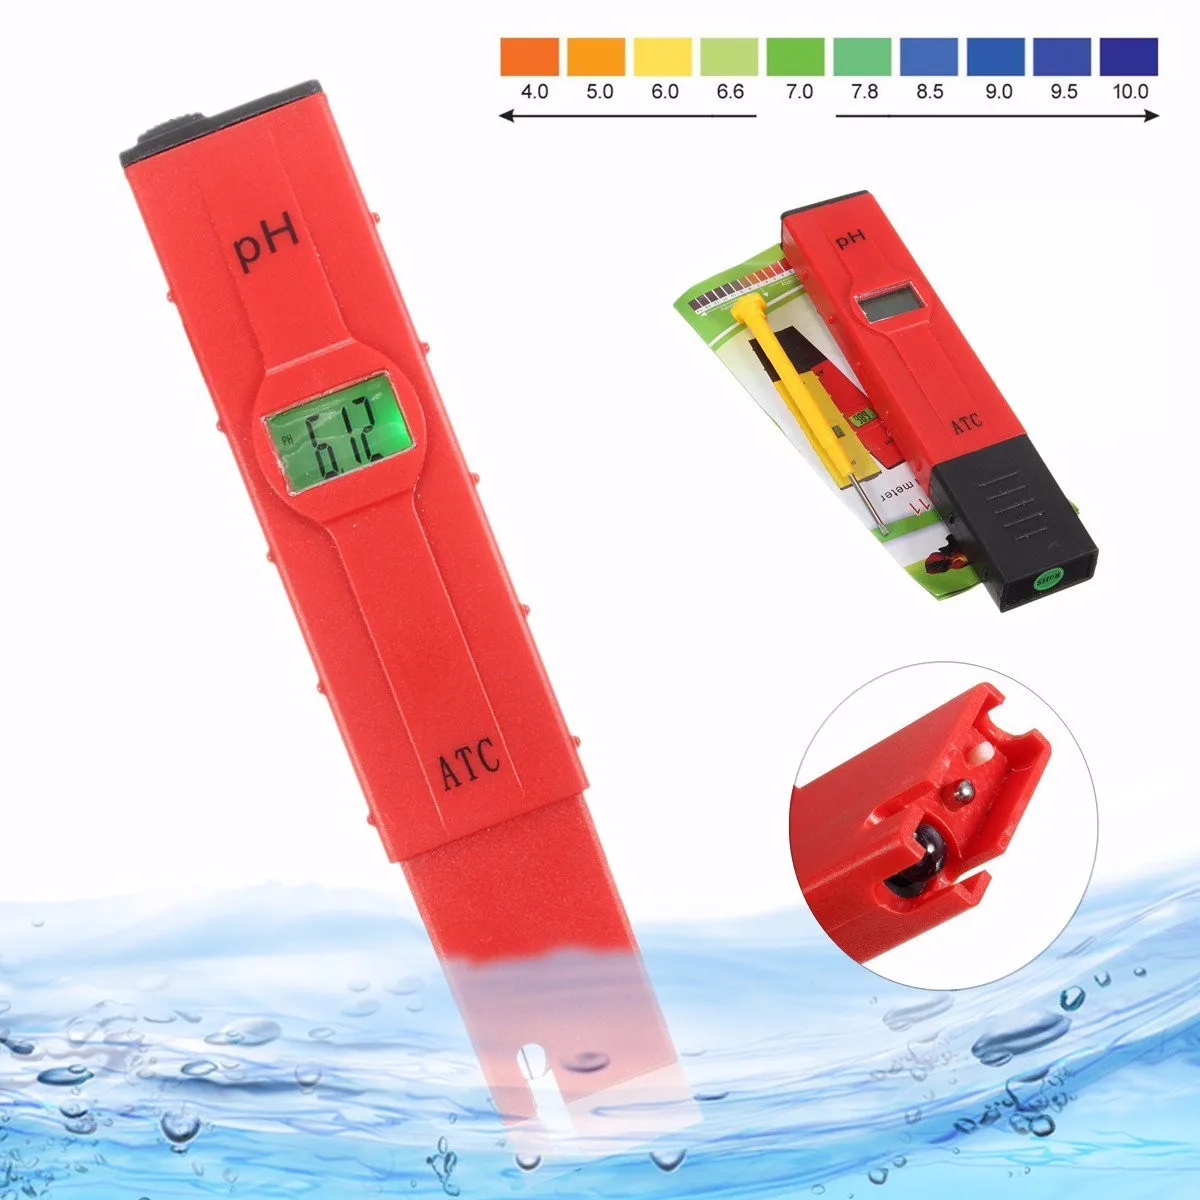 

JIGUOOR High Accuracy Pocket Digital Tester Meter Pen LCD PH Monitor For Drink Food Lab Aquarium Pool Water Measuring Tool